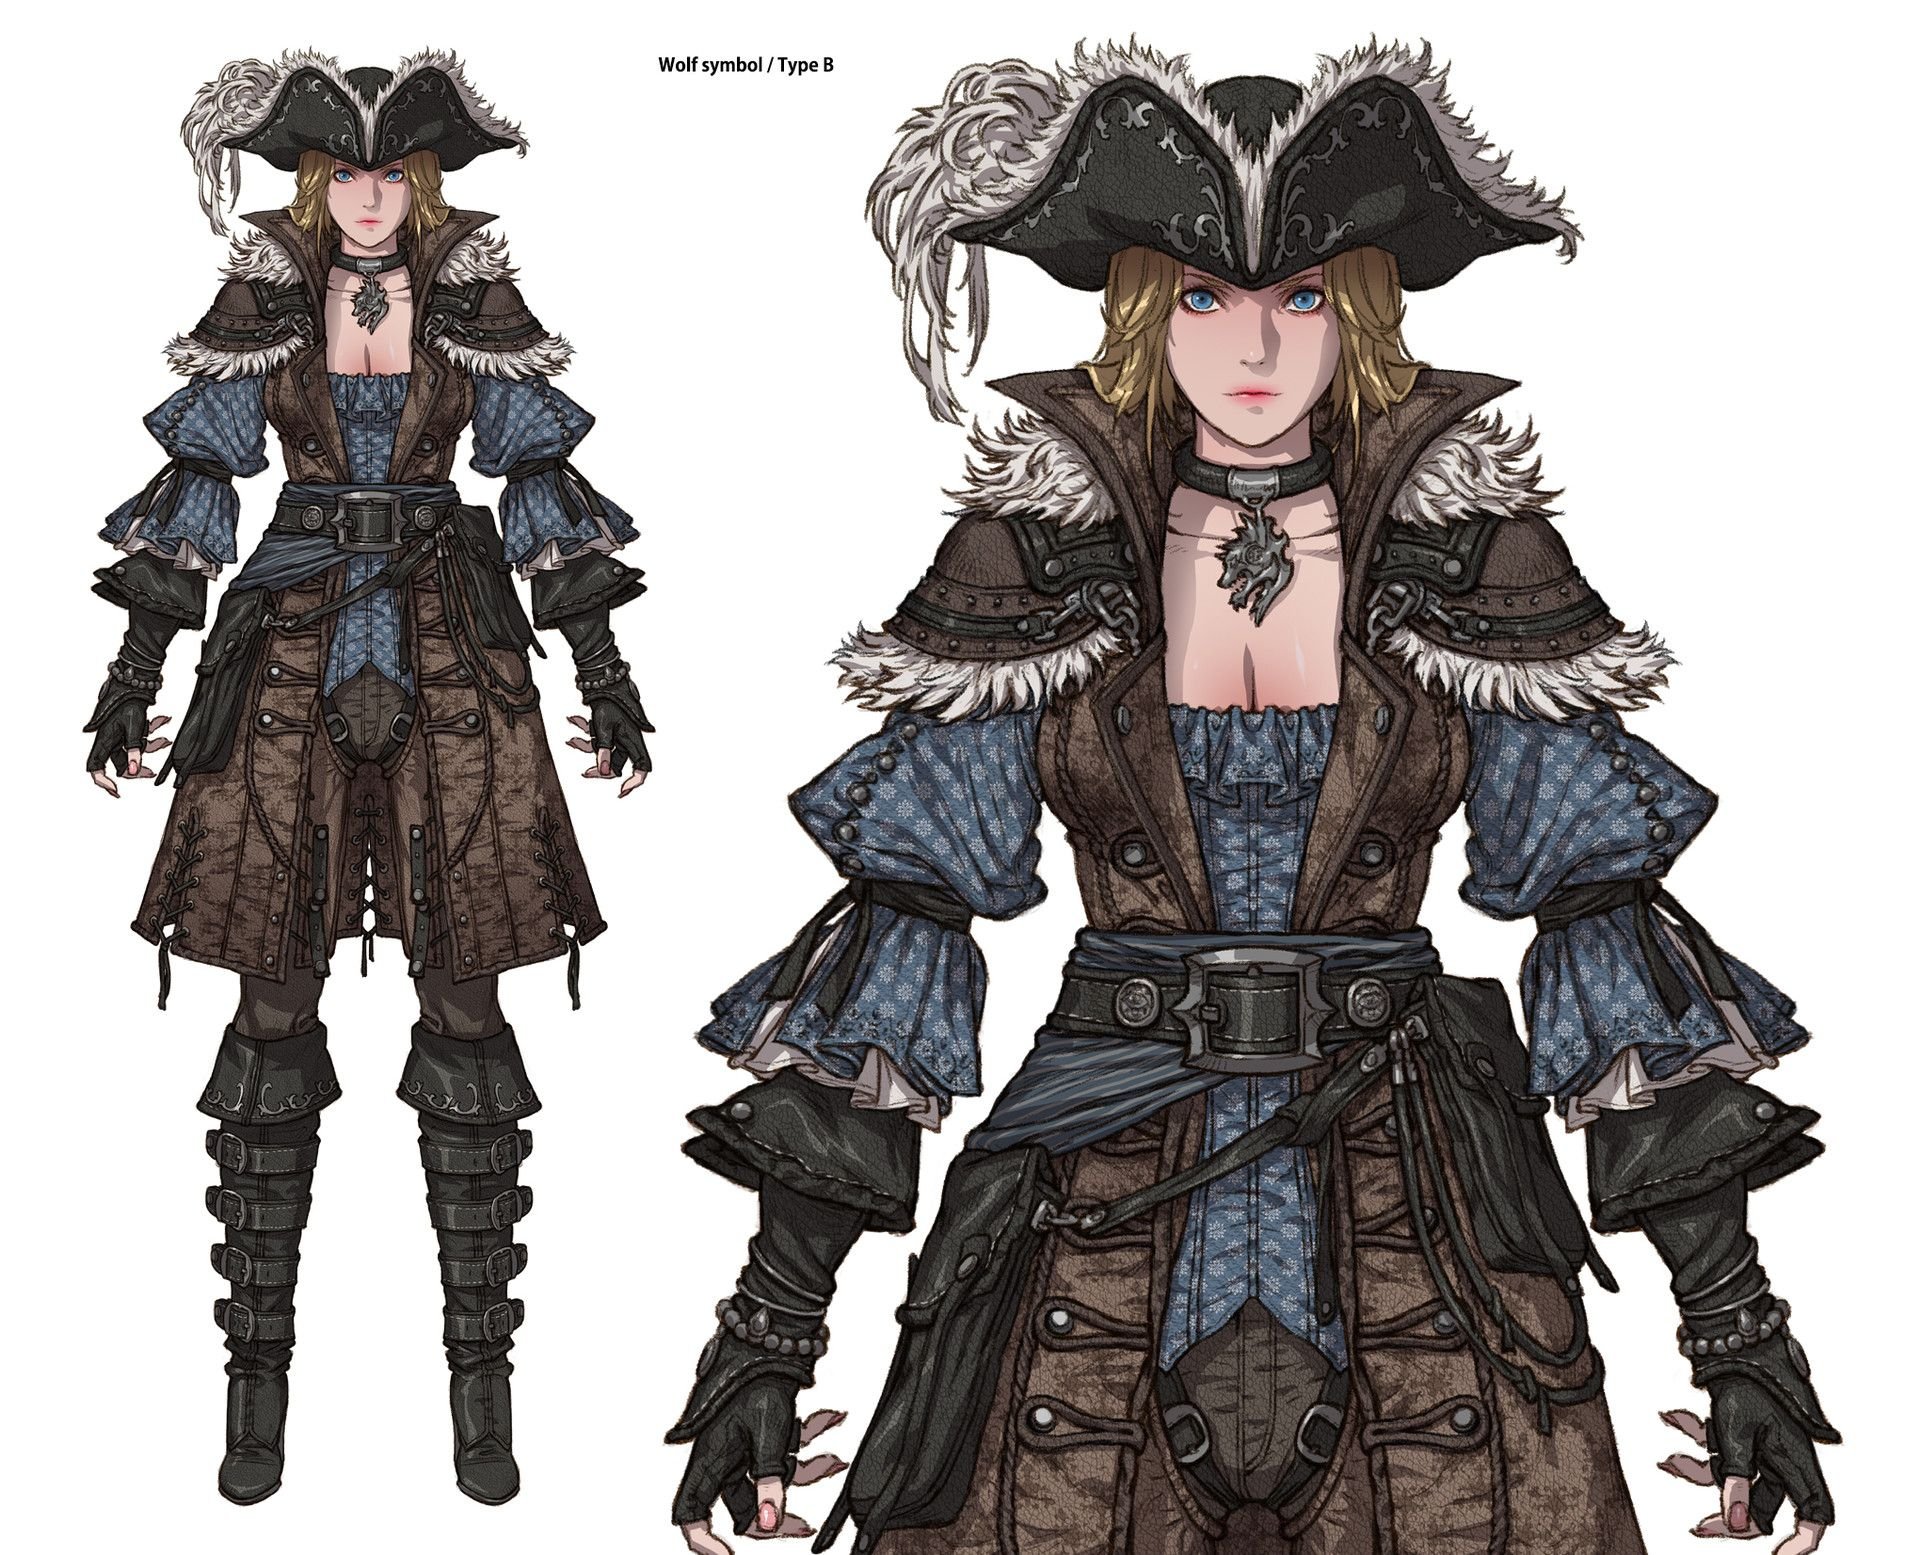 Пиратка ассасин мираж. Одежда пиратов референс. Костюм пирата референс. Пират референс. Пиратский костюм фэнтези.